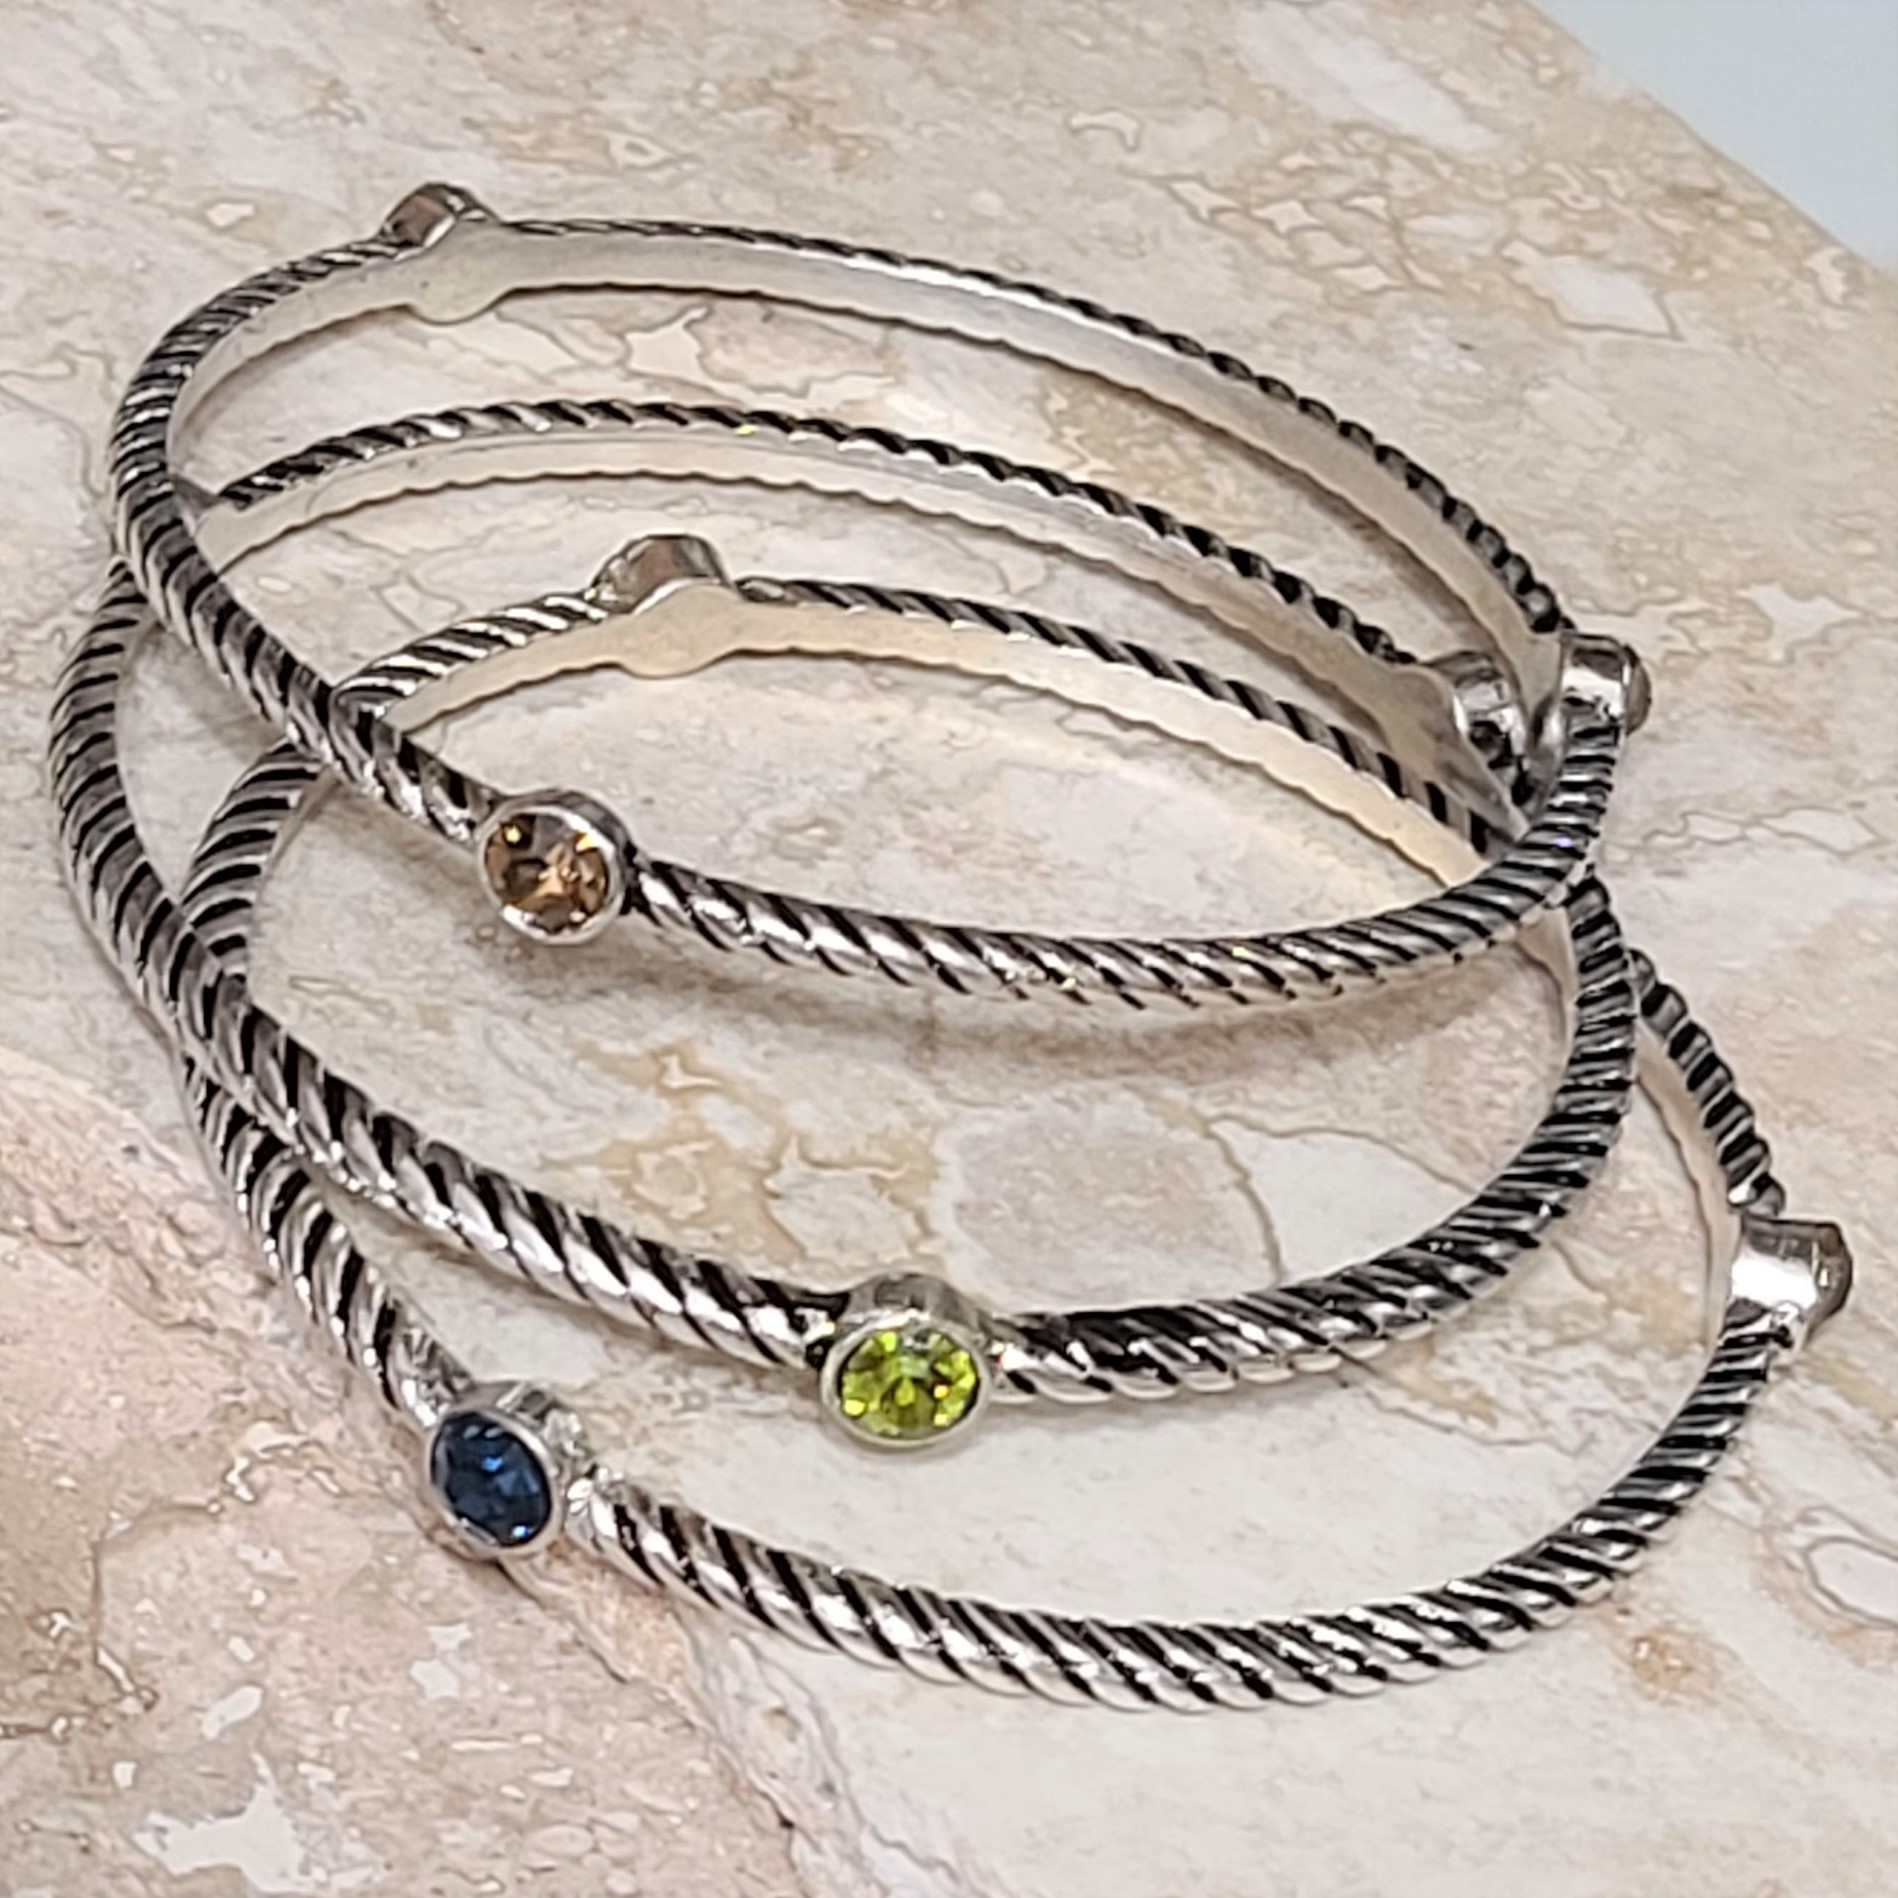 Set of 3 Oxidized Twisted Bangle Bracelets with Rhinestones - Click Image to Close